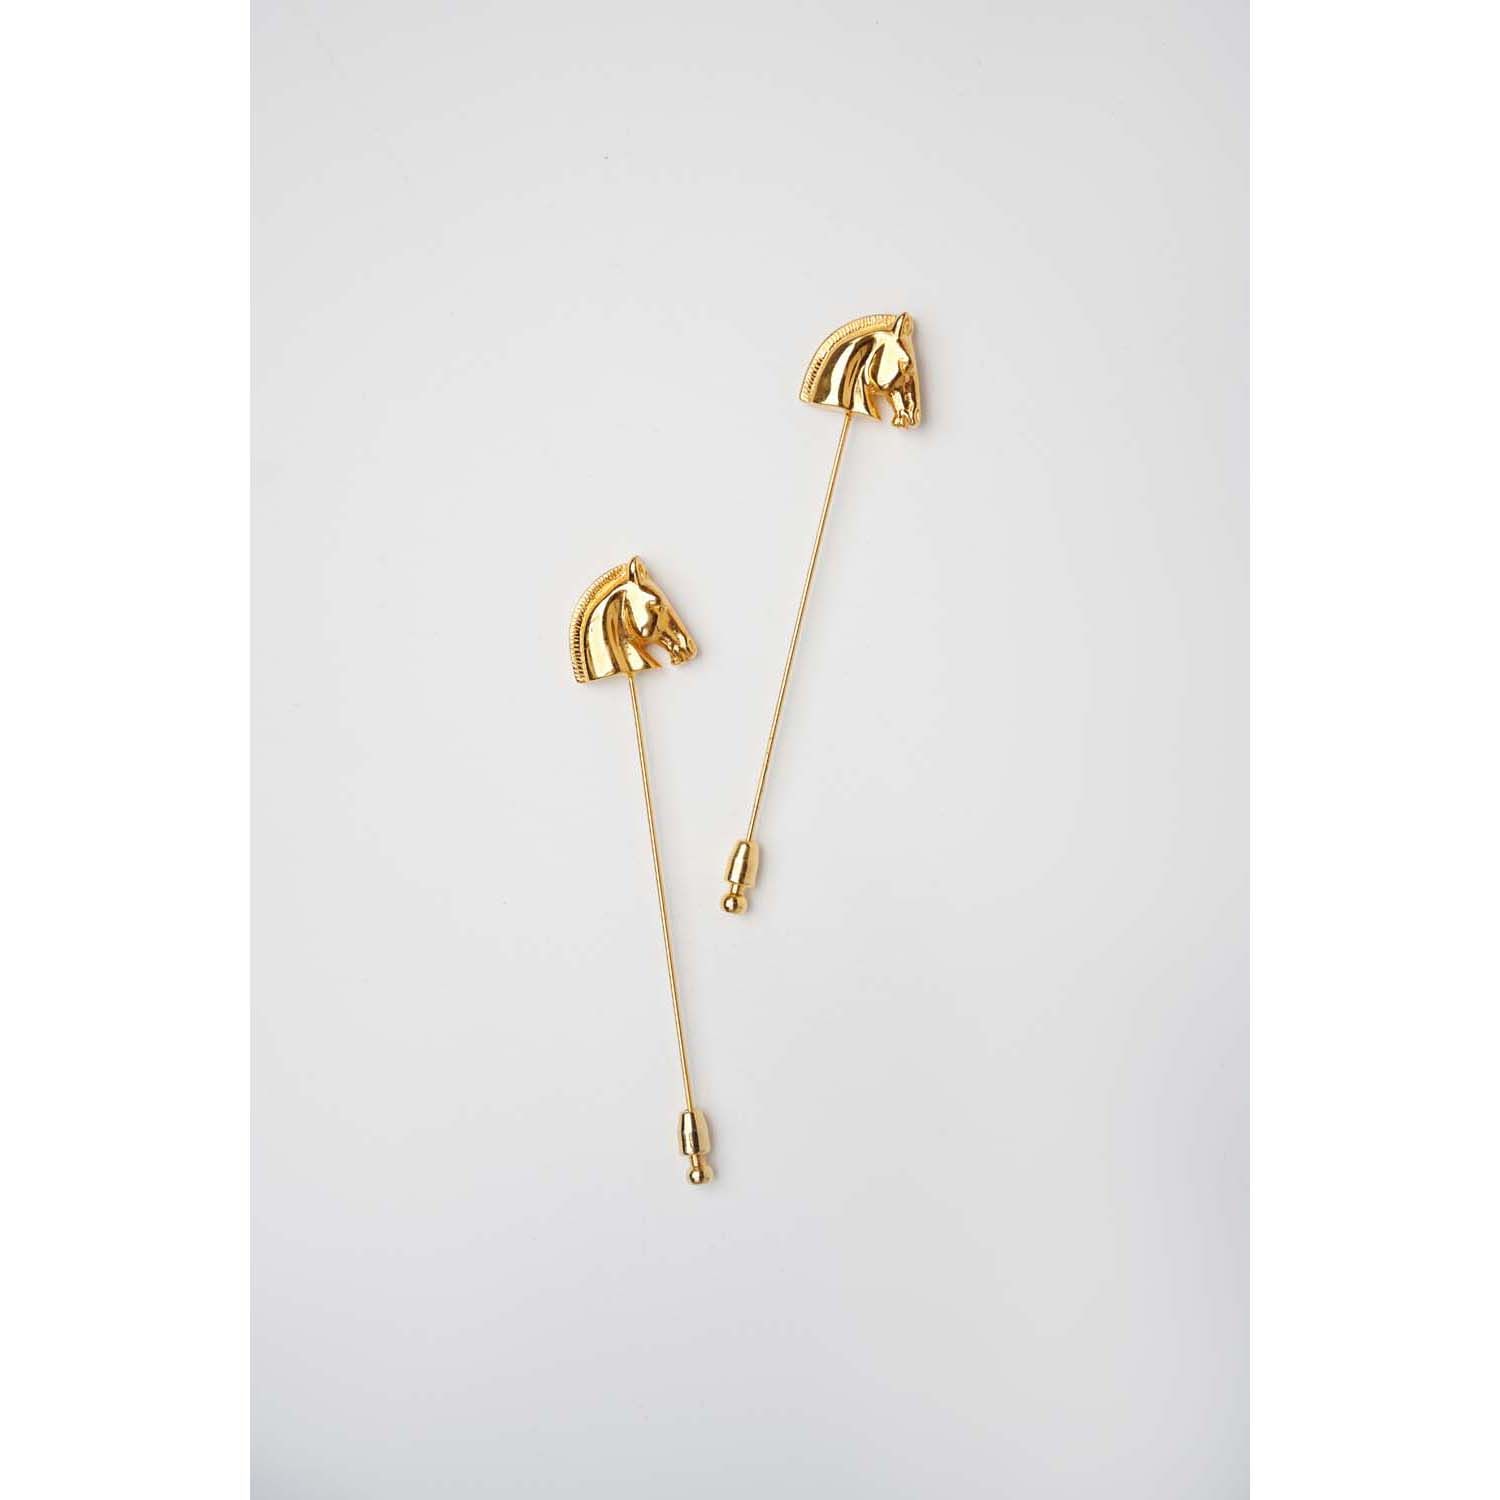 Null 爱马仕，巴黎
两个镀金金属 "马头 "领带夹
已签名，Arthus Bertrand 版
尺寸：8.5 x 1.8 厘米